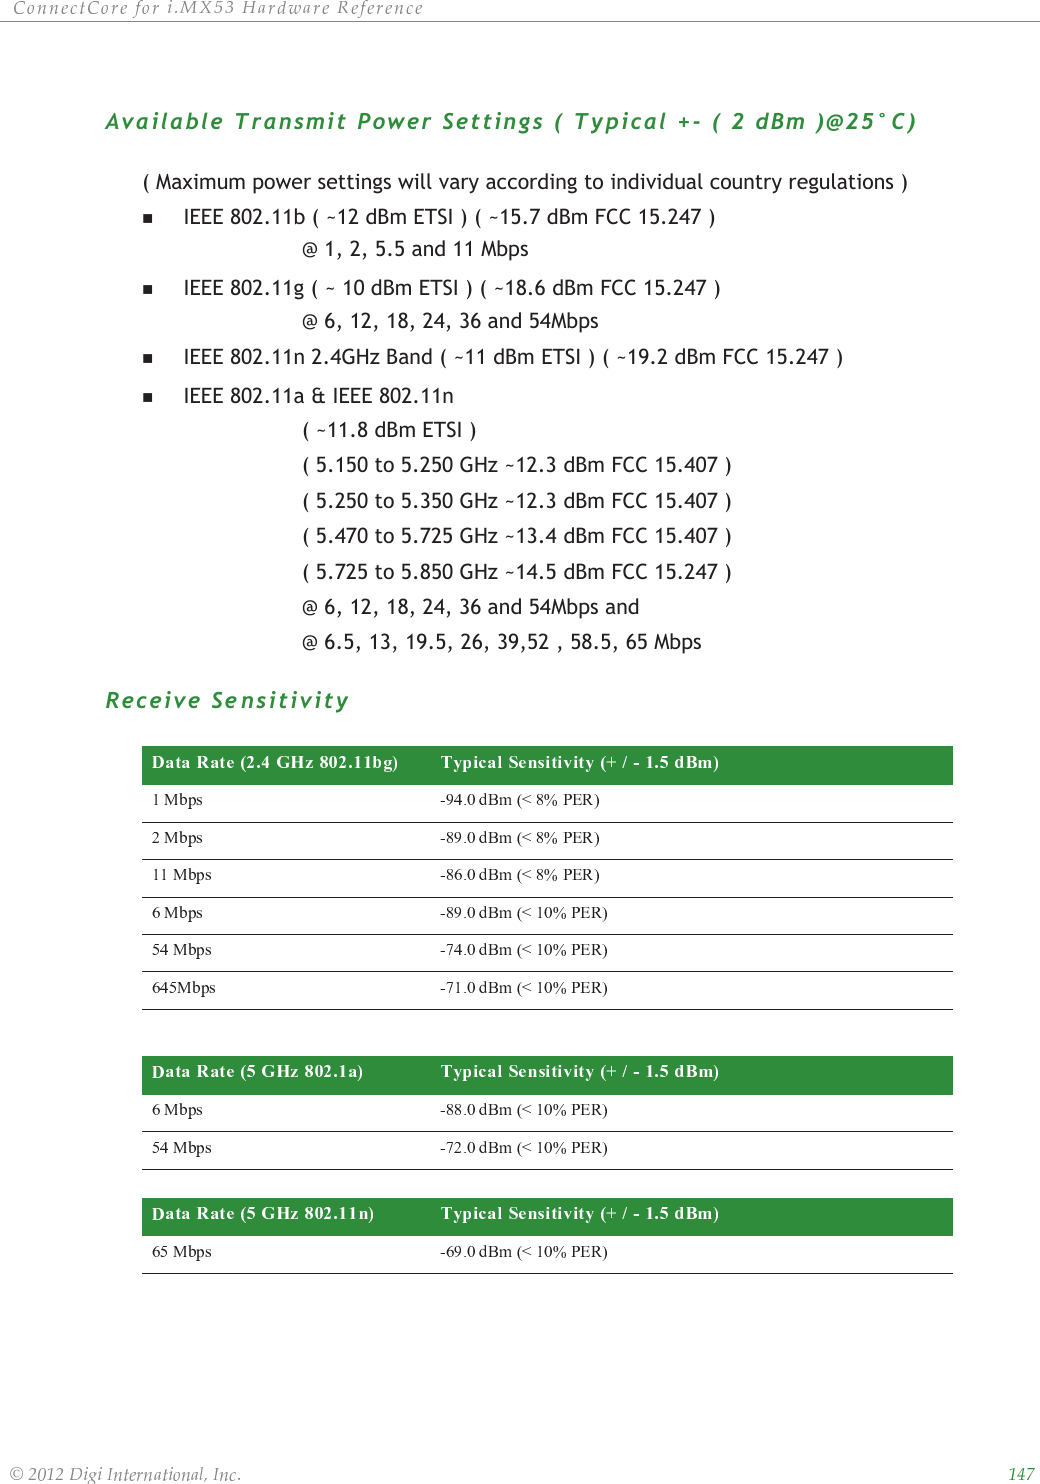 ȱ ȱ ȱ ȱ ȱ ȱȱ ȱ ȱ ȱ ȱȱȱAvailable Transmi t Power Settings ( Typical +- ( 2 dBm )@25°C)( Maximum power settings will vary according to individual country regulations )IEEE 802.11b ( ~12 dBm ETSI ) ( ~15.7 dBm FCC 15.247 )                           @ 1, 2, 5.5 and 11 Mbps IEEE 802.11g ( ~ 10 dBm ETSI ) ( ~18.6 dBm FCC 15.247 )                         @ 6, 12, 18, 24, 36 and 54MbpsIEEE 802.11n 2.4GHz Band ( ~11 dBm ETSI ) ( ~19.2 dBm FCC 15.247 )IEEE 802.11a &amp; IEEE 802.11n                          ( ~11.8 dBm ETSI )                          ( 5.150 to 5.250 GHz ~12.3 dBm FCC 15.407 )                         ( 5.250 to 5.350 GHz ~12.3 dBm FCC 15.407 )                         ( 5.470 to 5.725 GHz ~13.4 dBm FCC 15.407 )                         ( 5.725 to 5.850 GHz ~14.5 dBm FCC 15.247 )                         @ 6, 12, 18, 24, 36 and 54Mbps and                         @ 6.5, 13, 19.5, 26, 39,52 , 58.5, 65 MbpsReceive Se nsitivity 